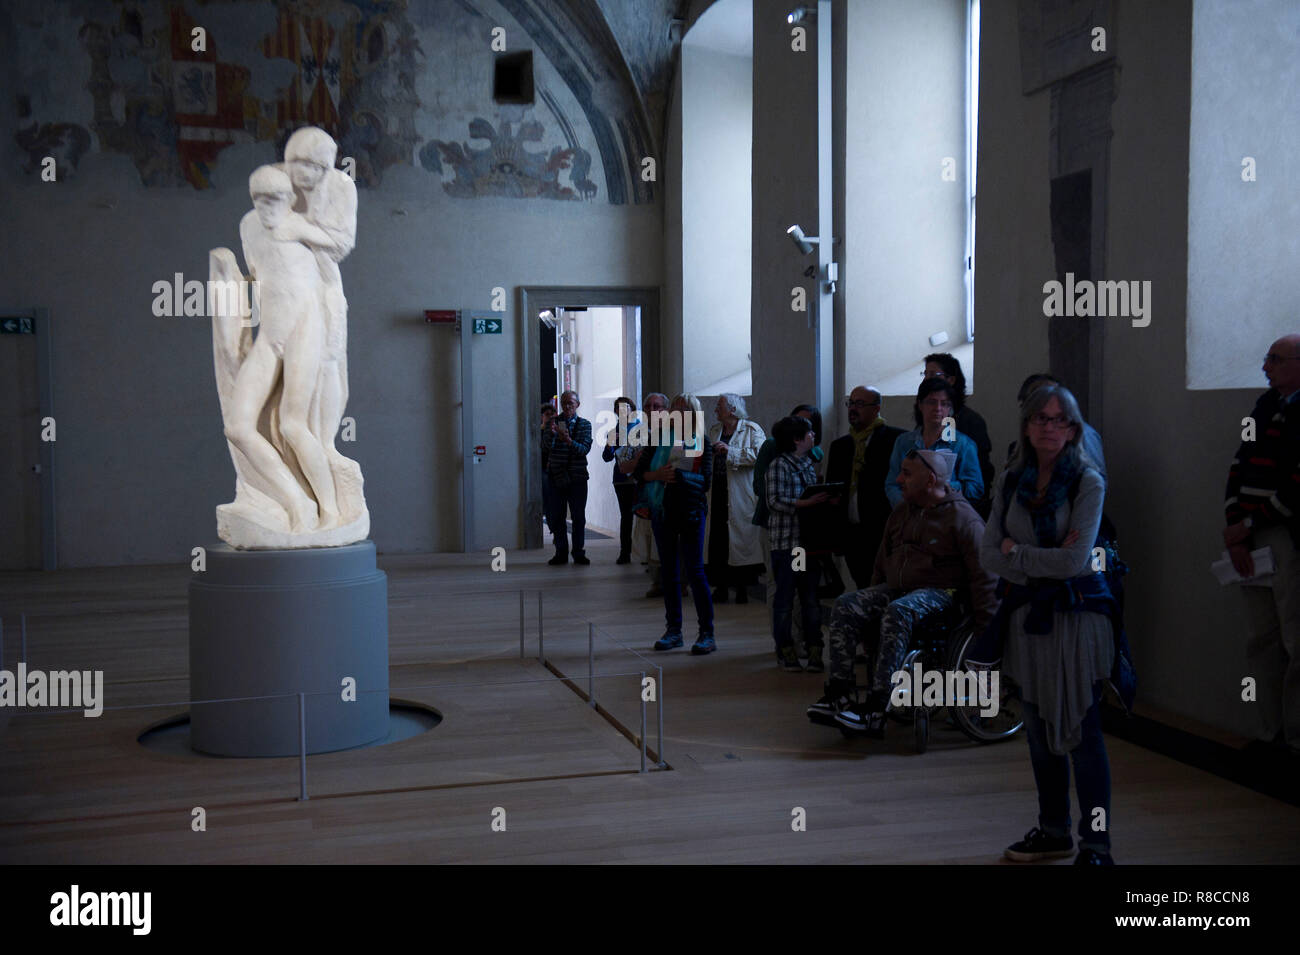 Italy, Lombardy, Milan, Castello Sforzesco. The unfinished sculpture of the Pietˆ Rondanini, the last marble work of Michelangelo Buonarroti Stock Photo